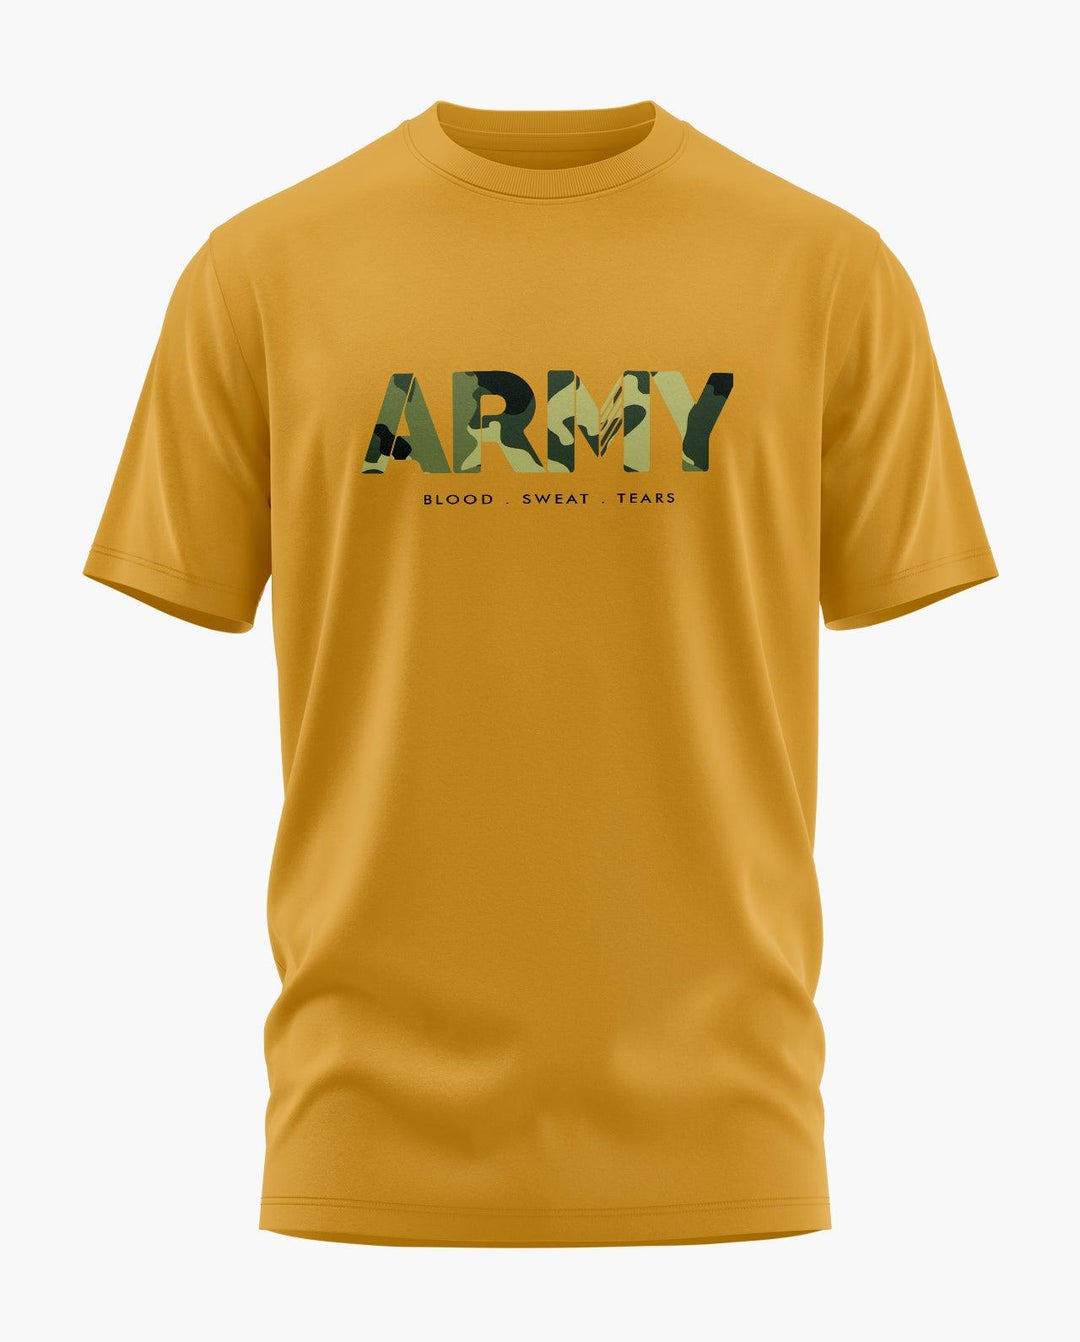 Army Camo T-Shirt - Aero Armour